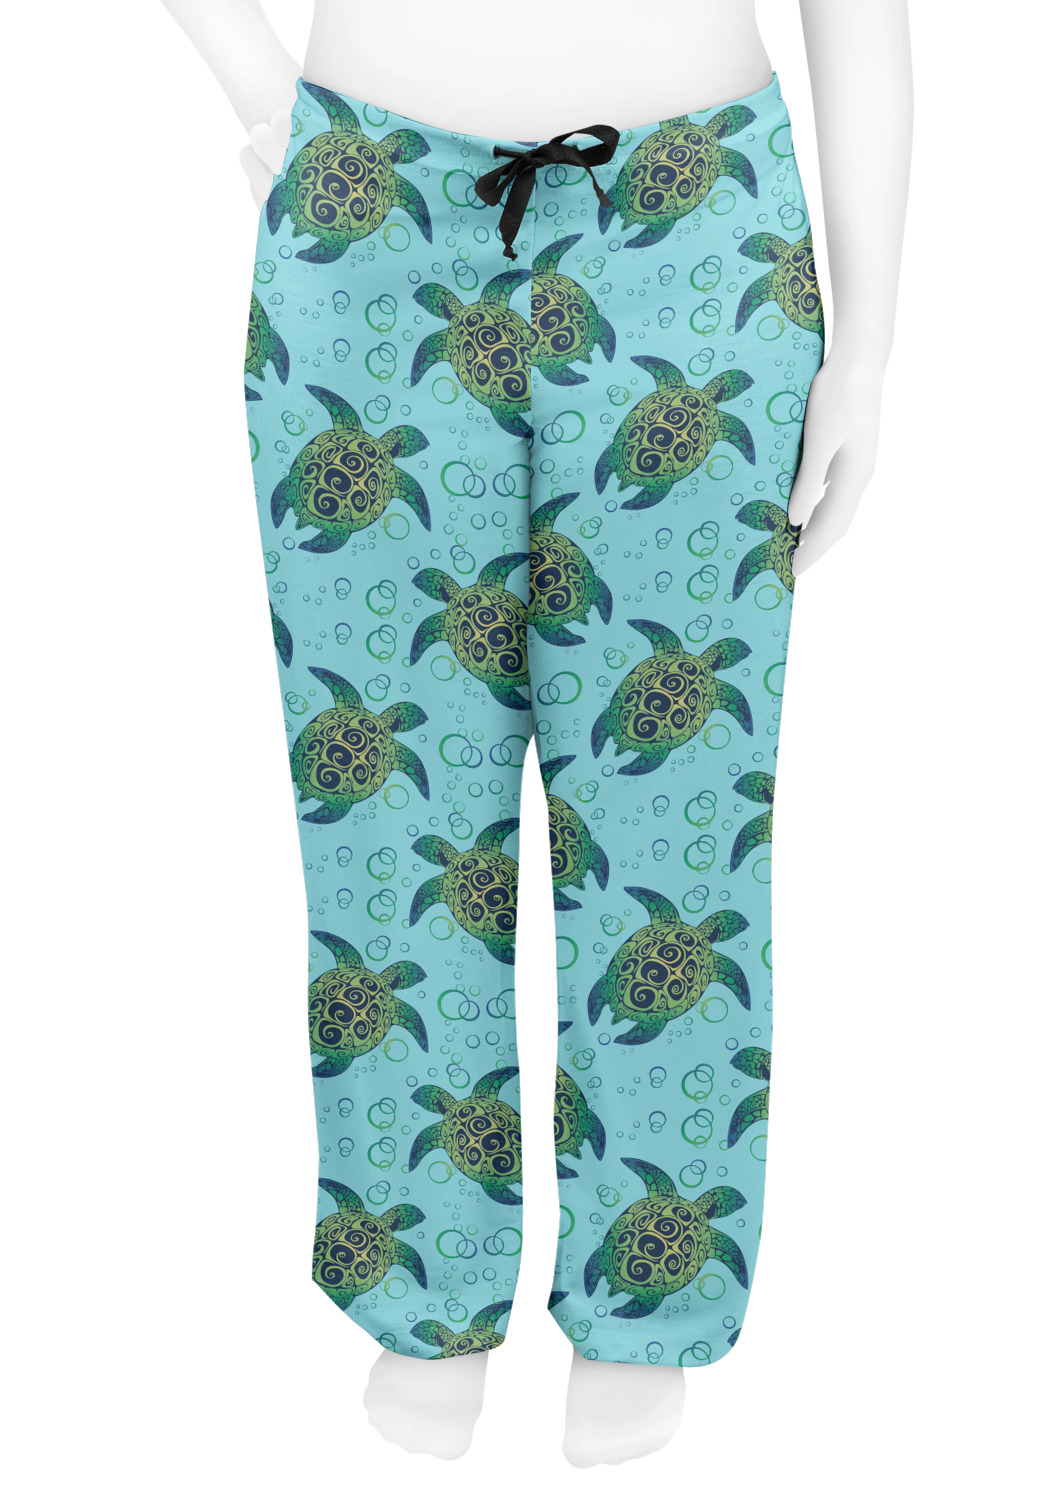 CHIFIGNO Colorful Sea Turtles Women's Pajama Pants Sleepwear Lounge Pajama  Bottoms Wide Leg XS-XL : Clothing, Shoes & Jewelry 